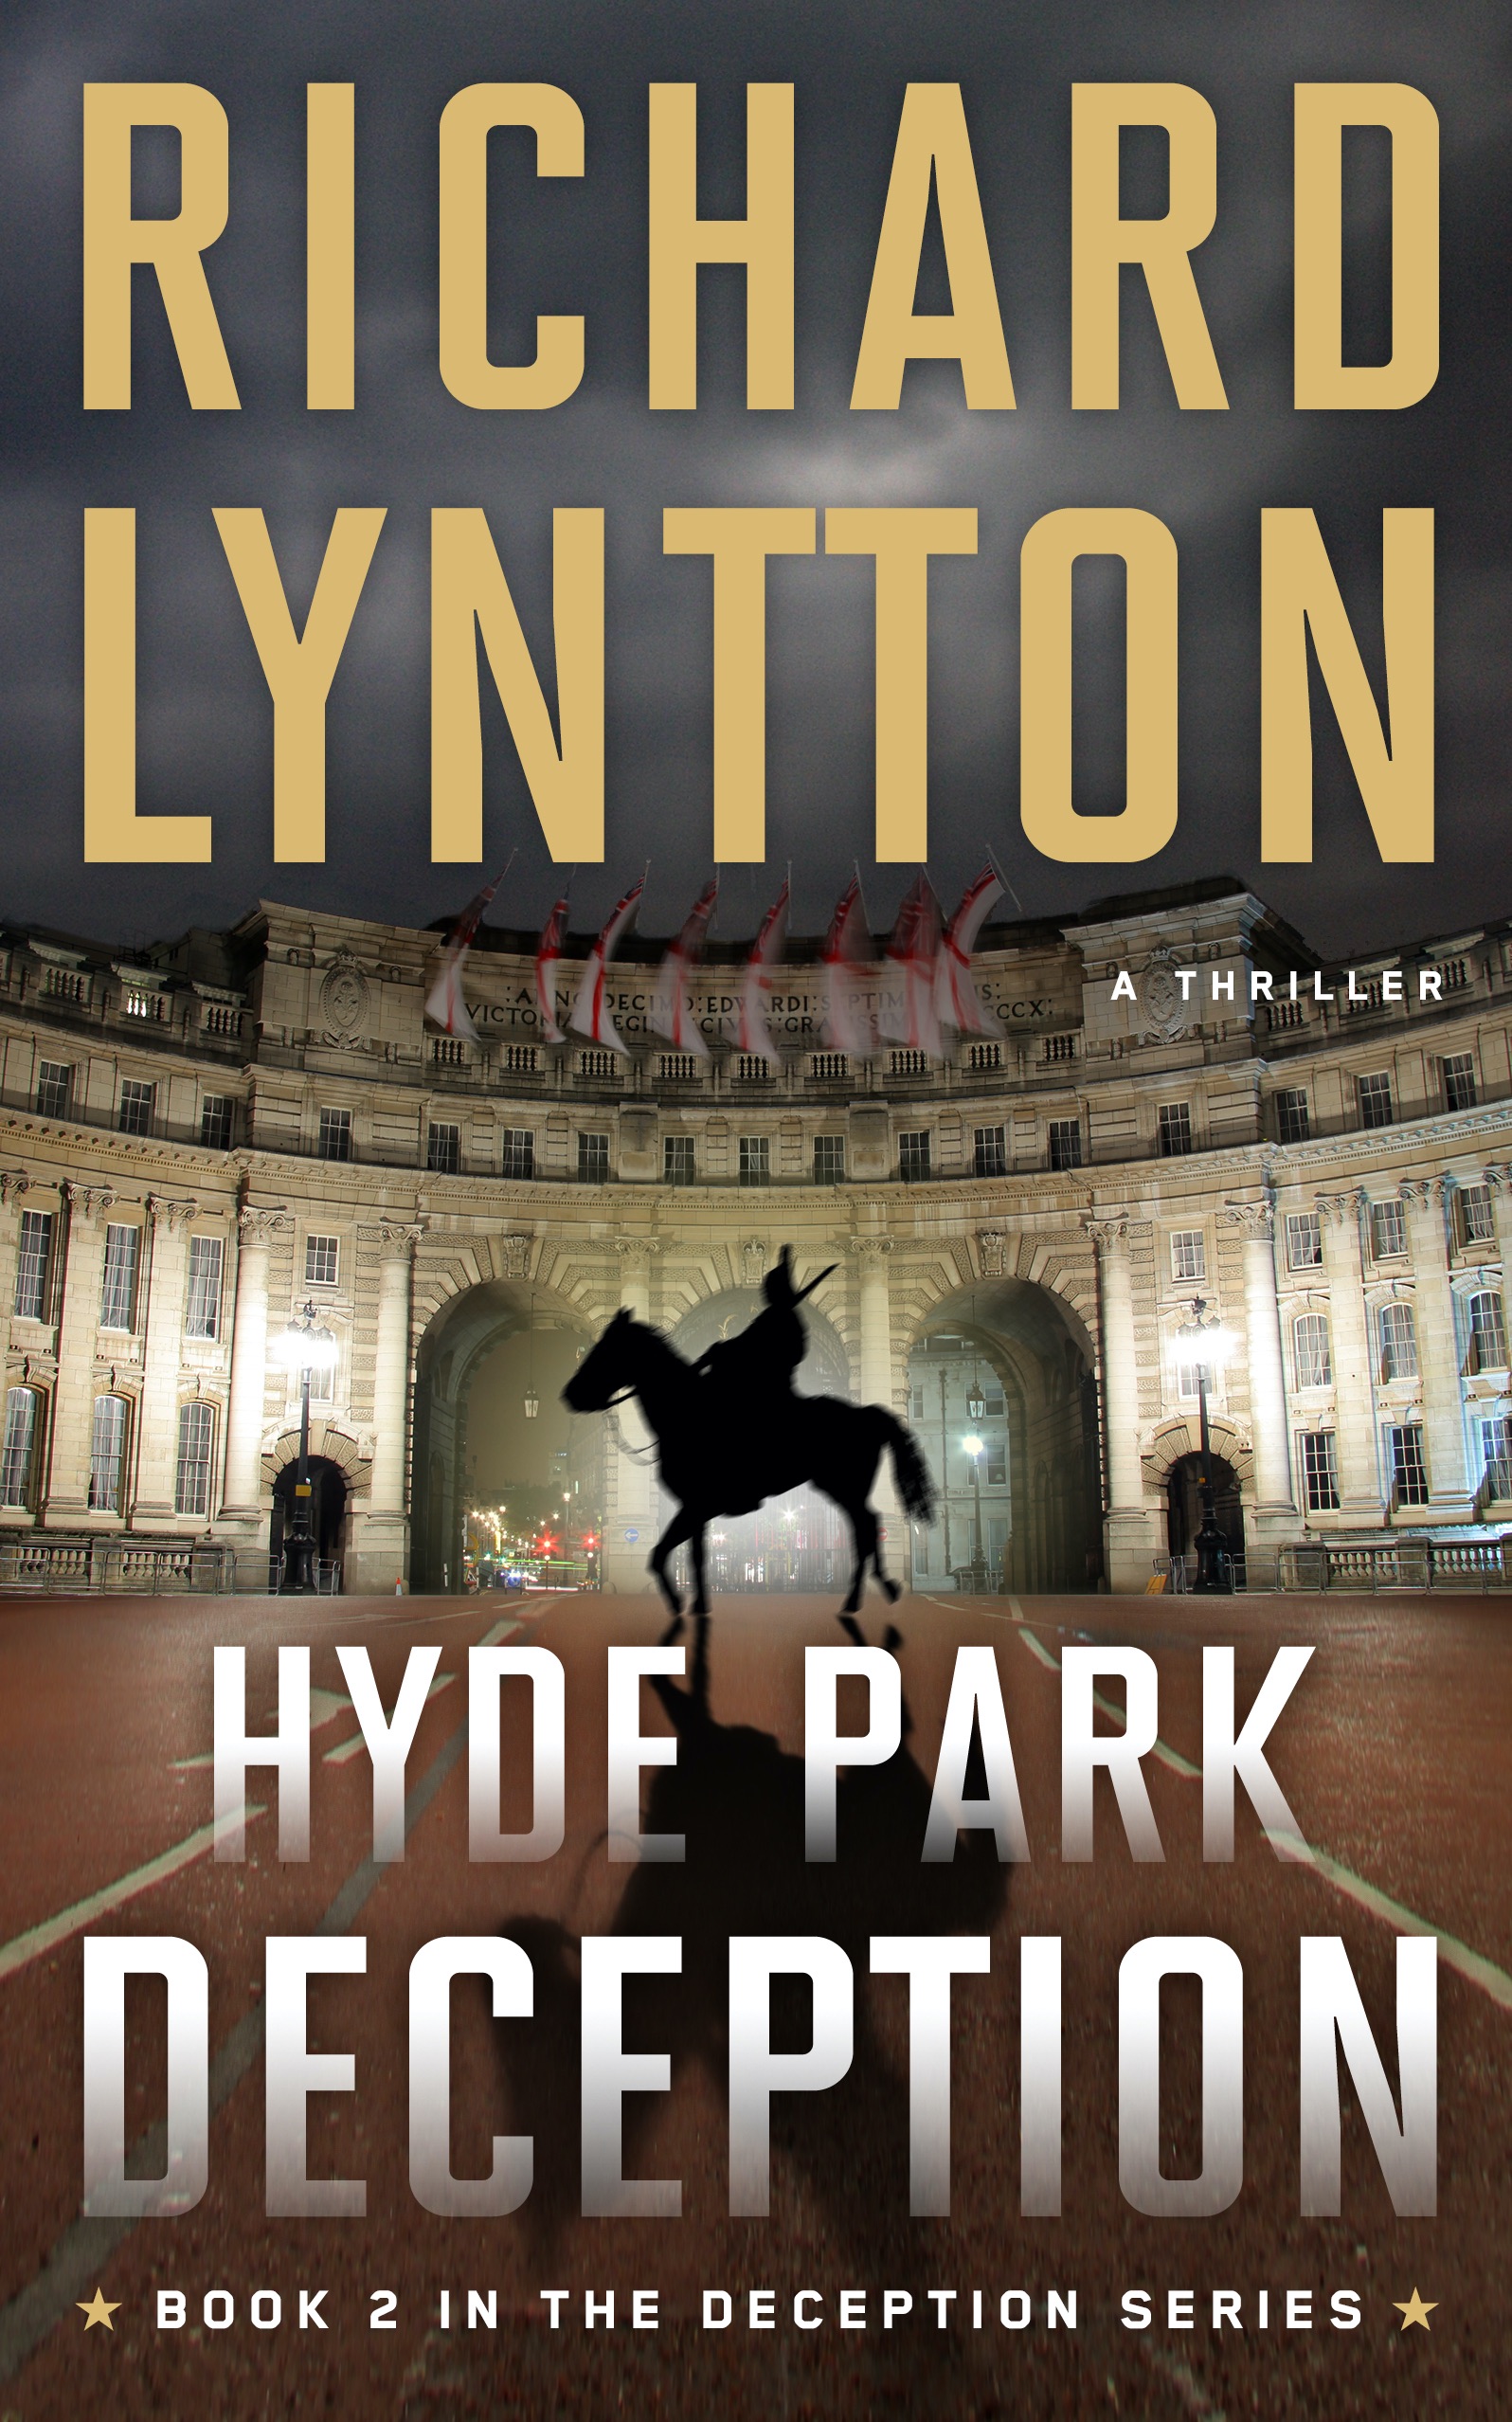 FREE: HYDE PARK DECEPTION by Richard Lyntton